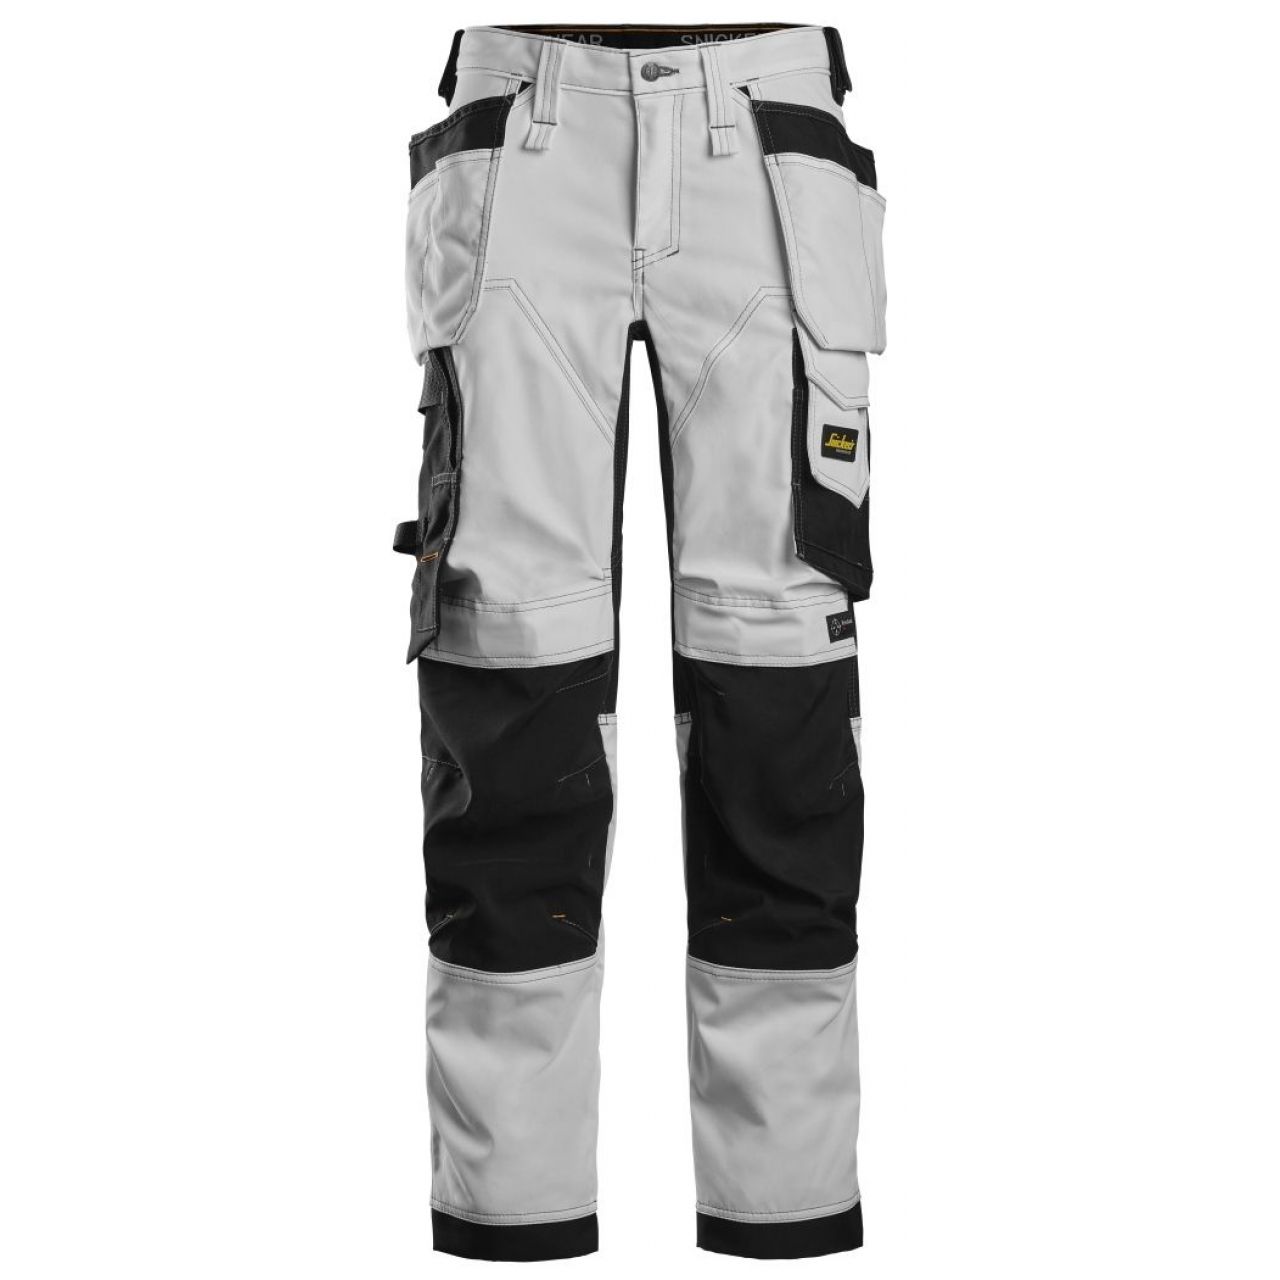 Pantalon elastico mujer bolsillos flotantes AllroundWork blanco-negro talla 020